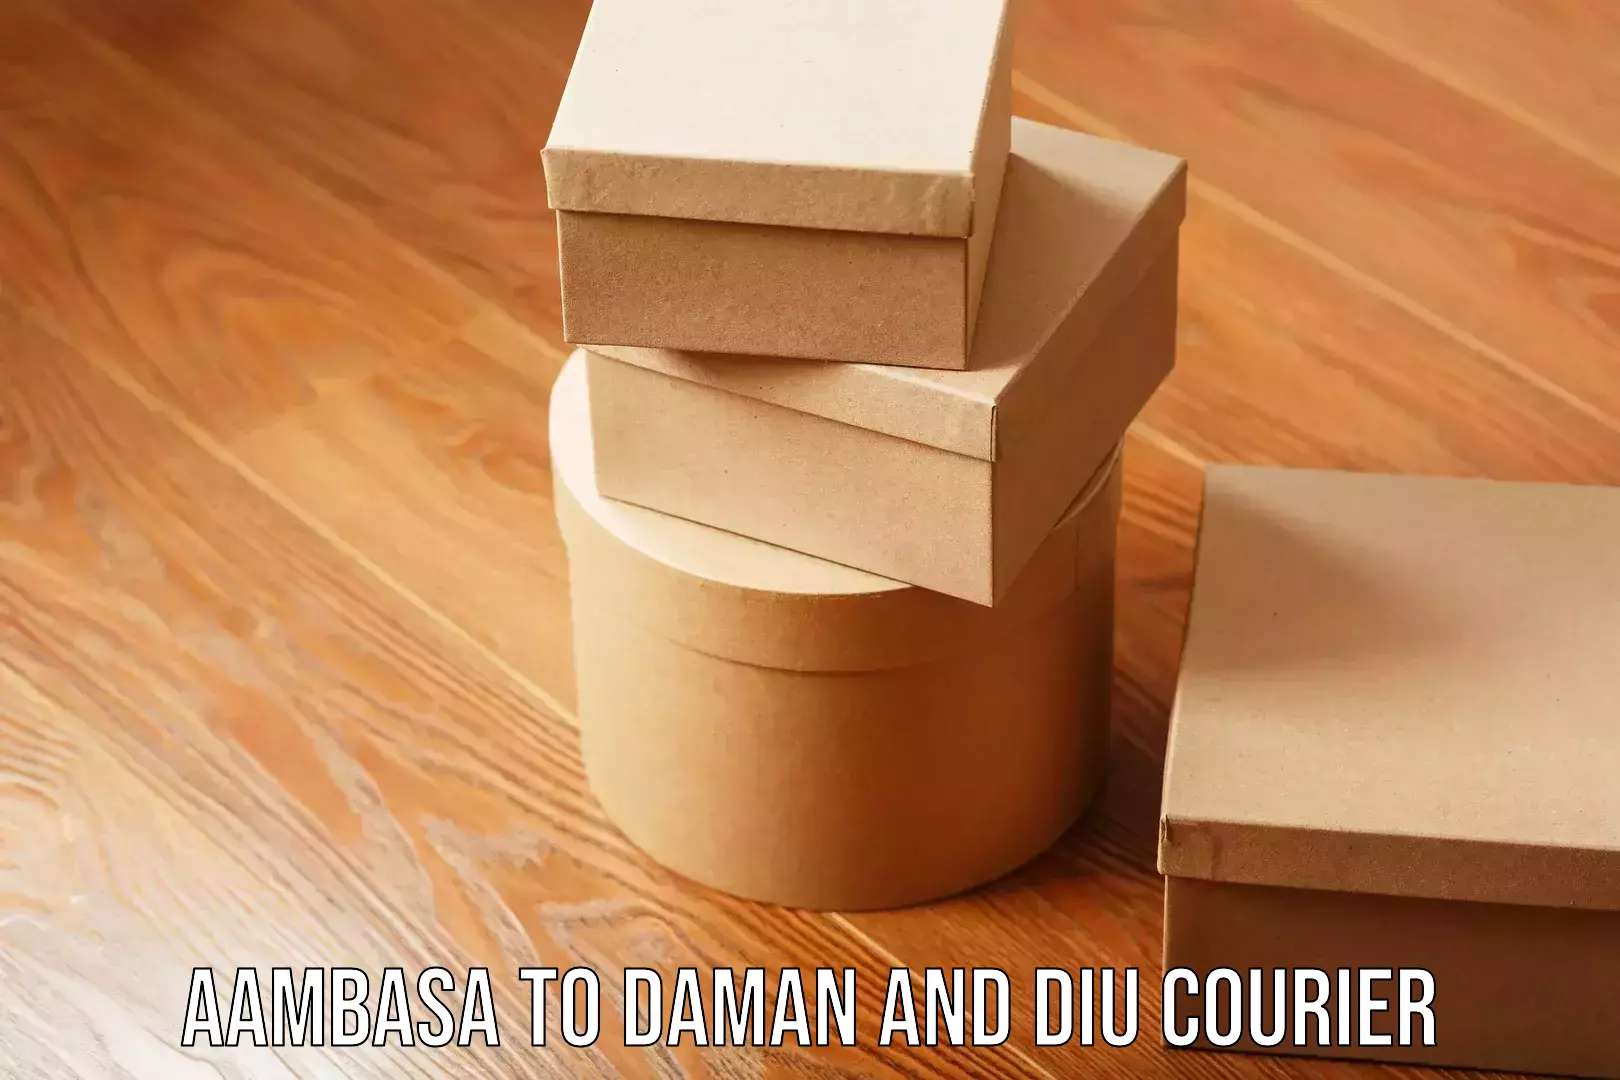 Efficient shipping operations Aambasa to Daman and Diu